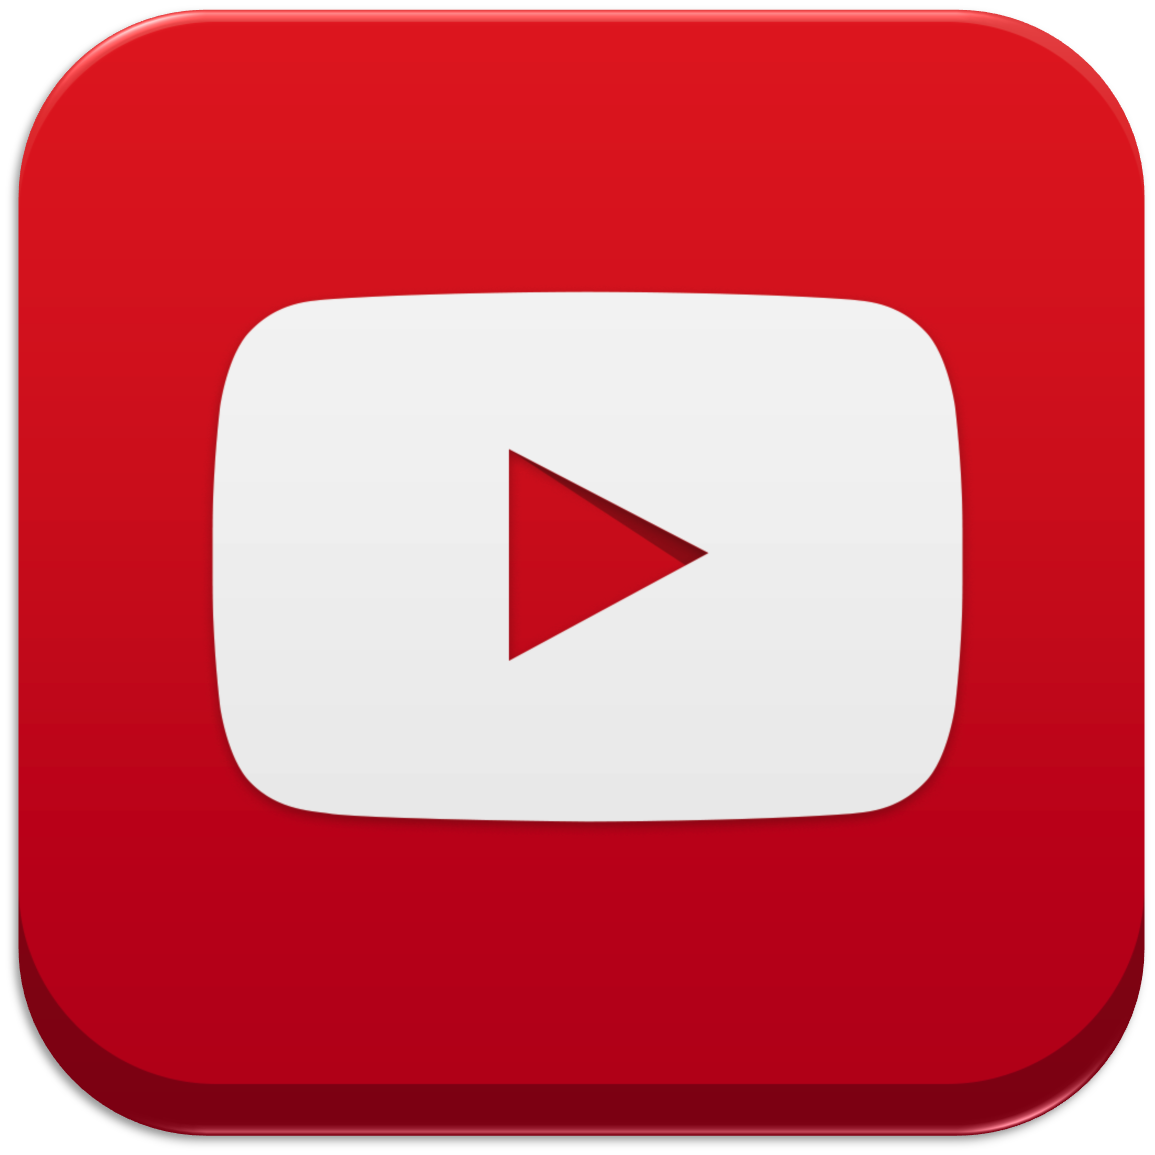 Library Of New Youtube Logo Png Royalty  Youtube Logo White BackgroundYoutube  Logo Image  free transparent png images  pngaaacom